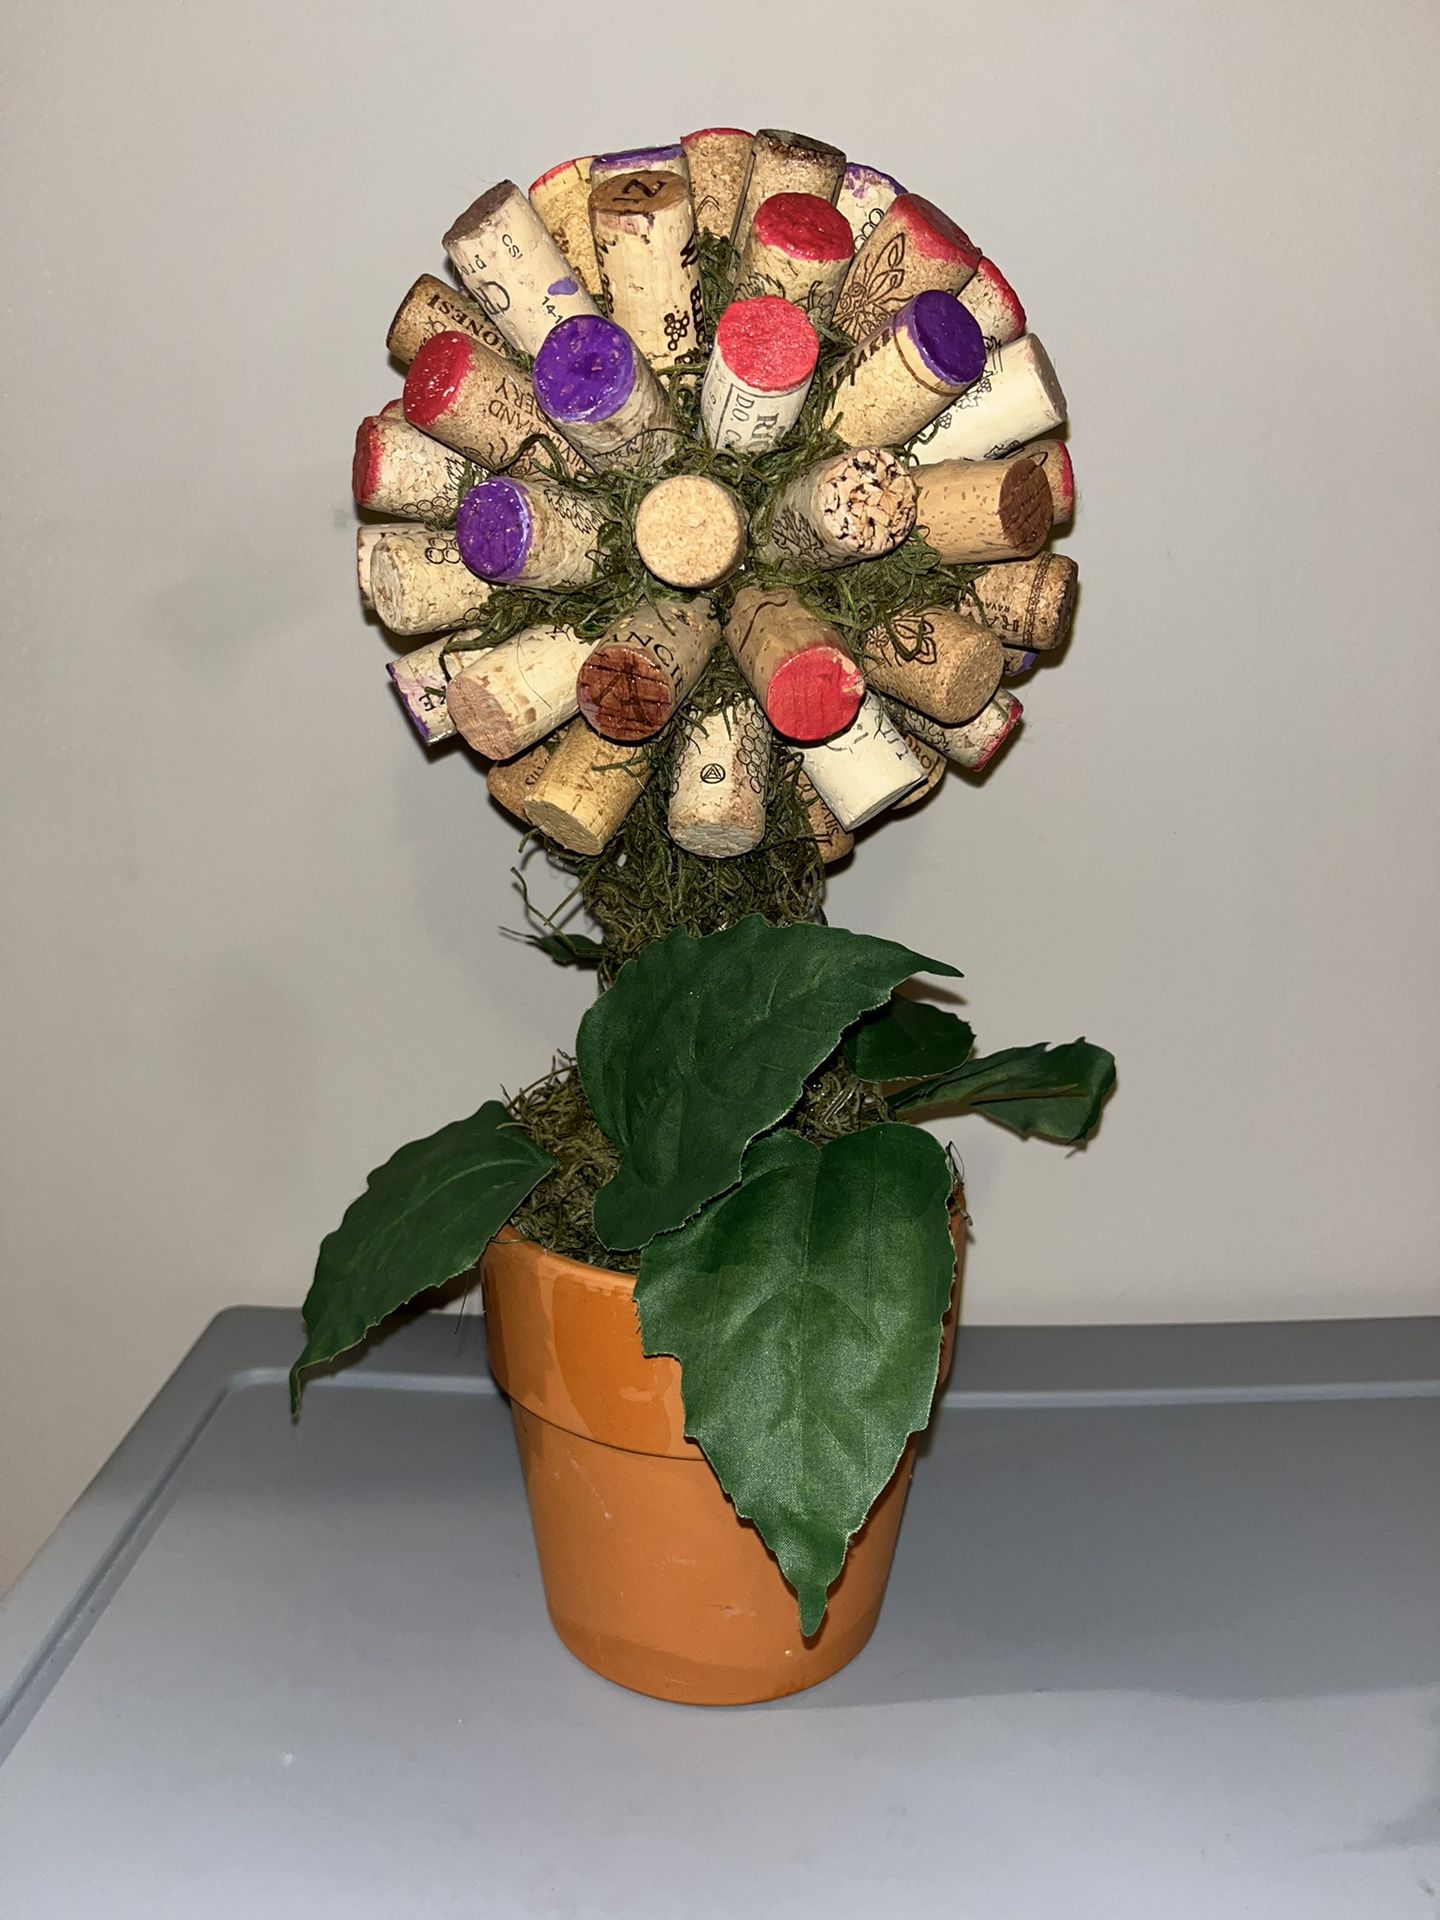 Wine Cork Flower with Terracotta Pot Home Decor